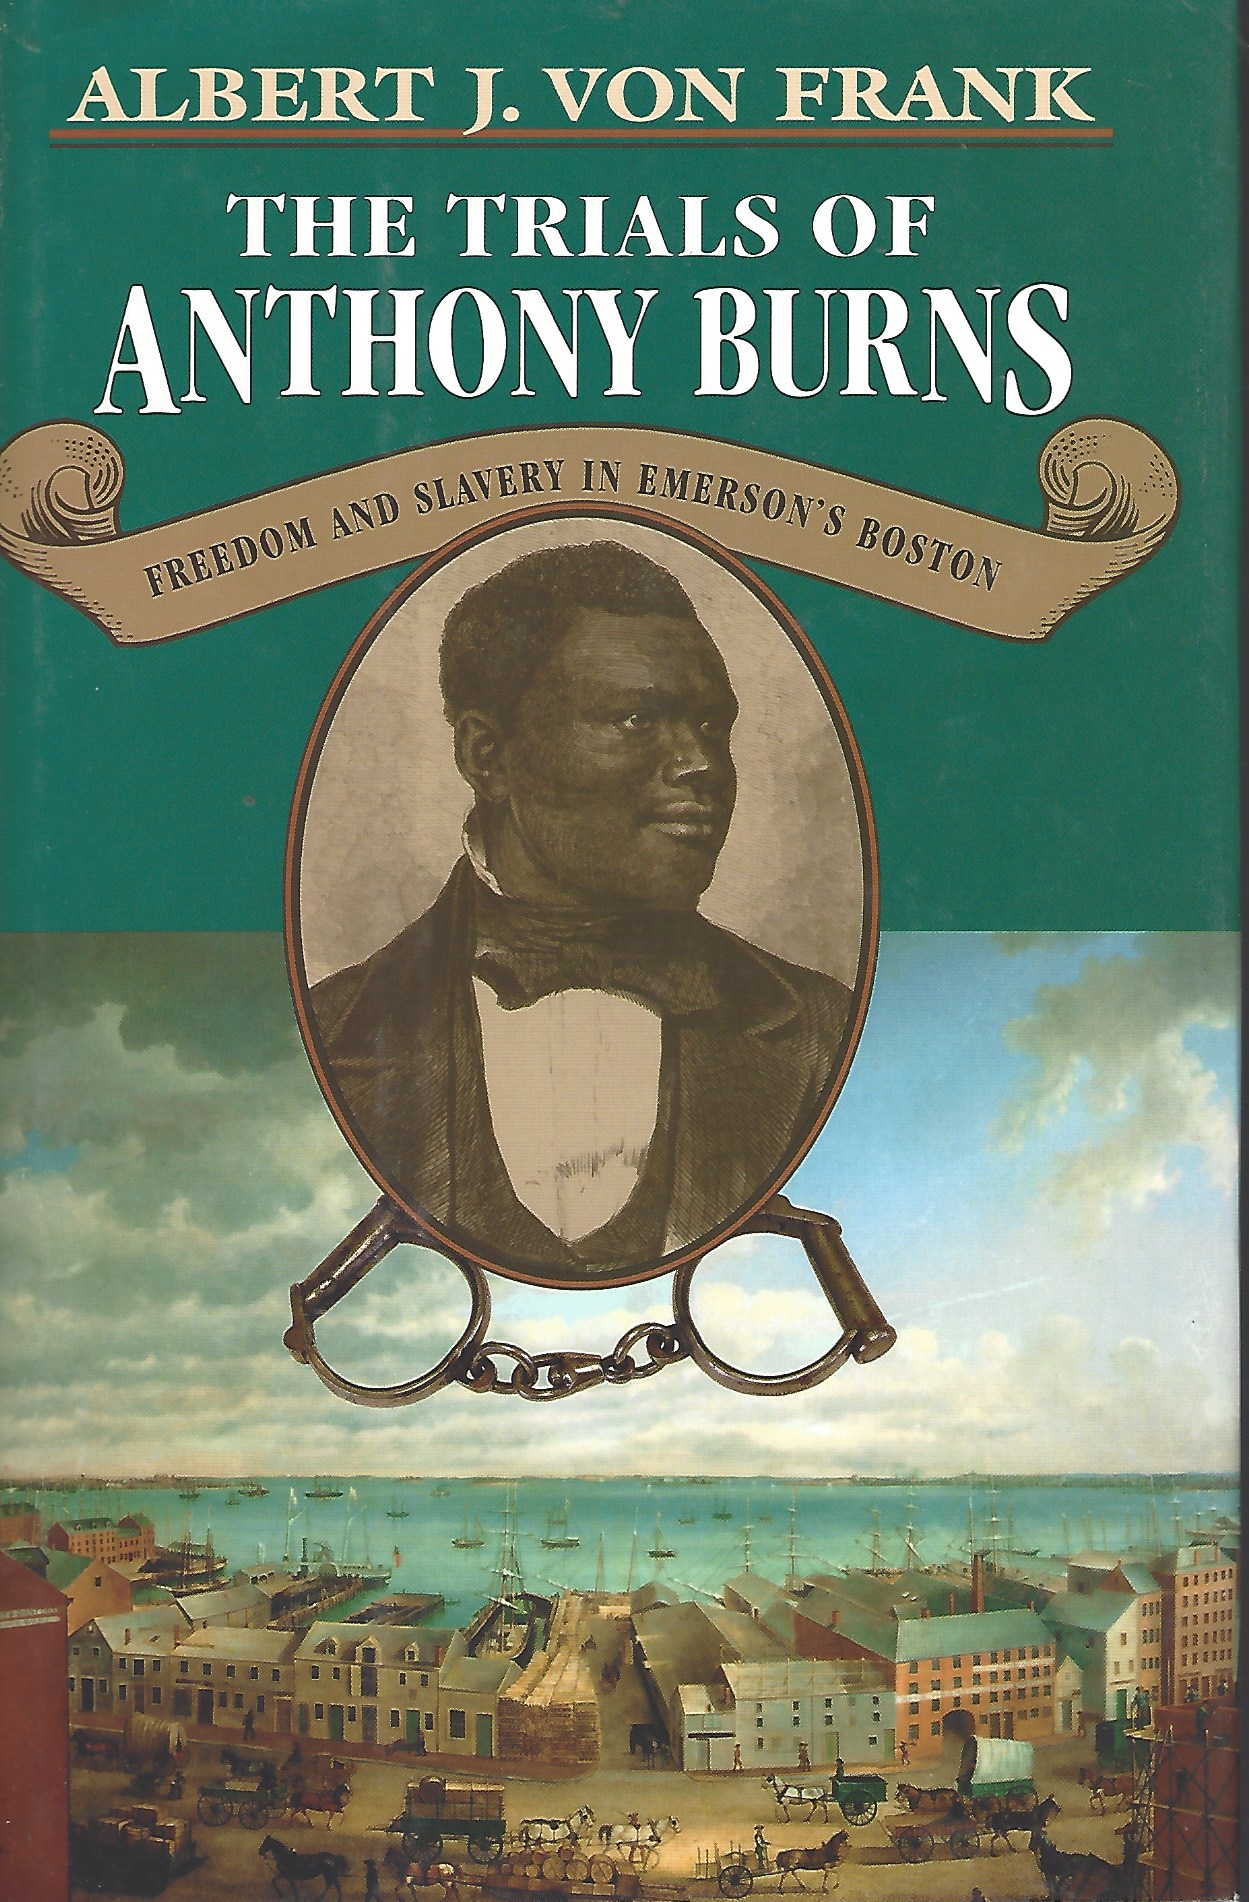 VON FRANK ALBERT J. - Trials of Anthony Burns: Freedom and Slavery in Emerson's Boston